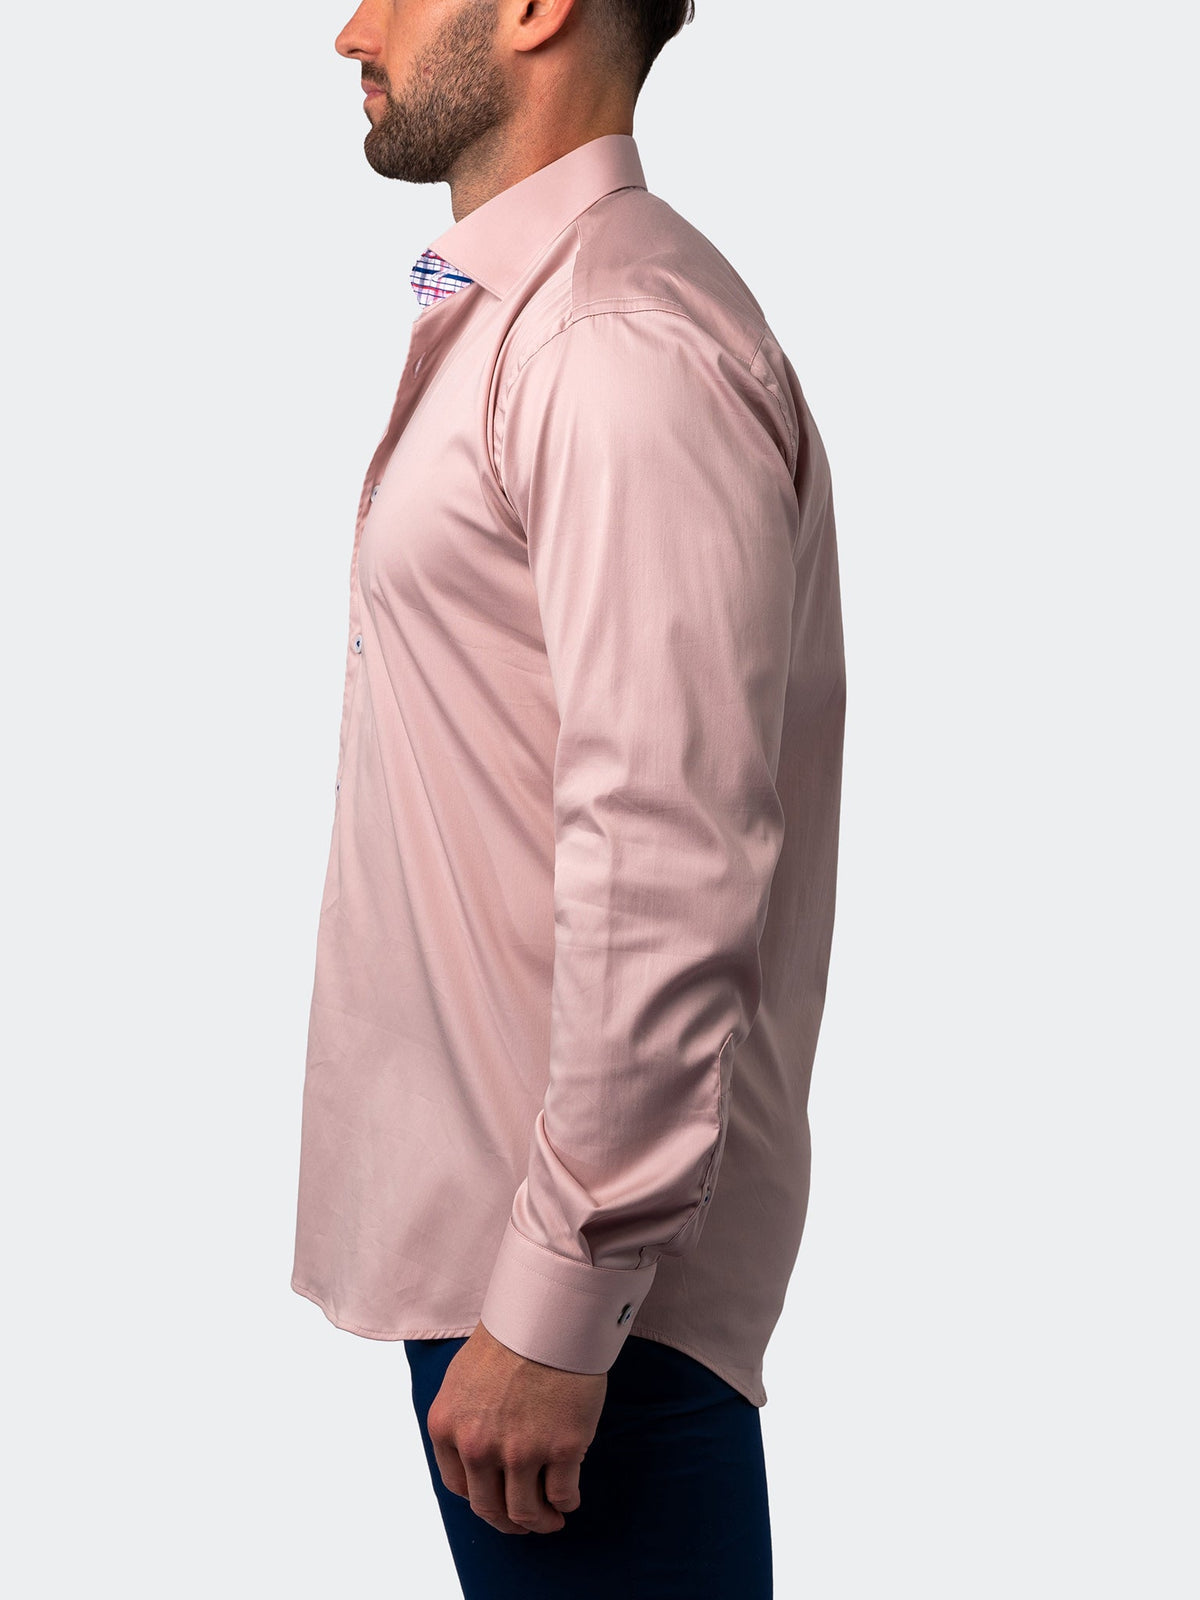 Maceoo Dress Shirt Long Sleeve Elacetin Pink